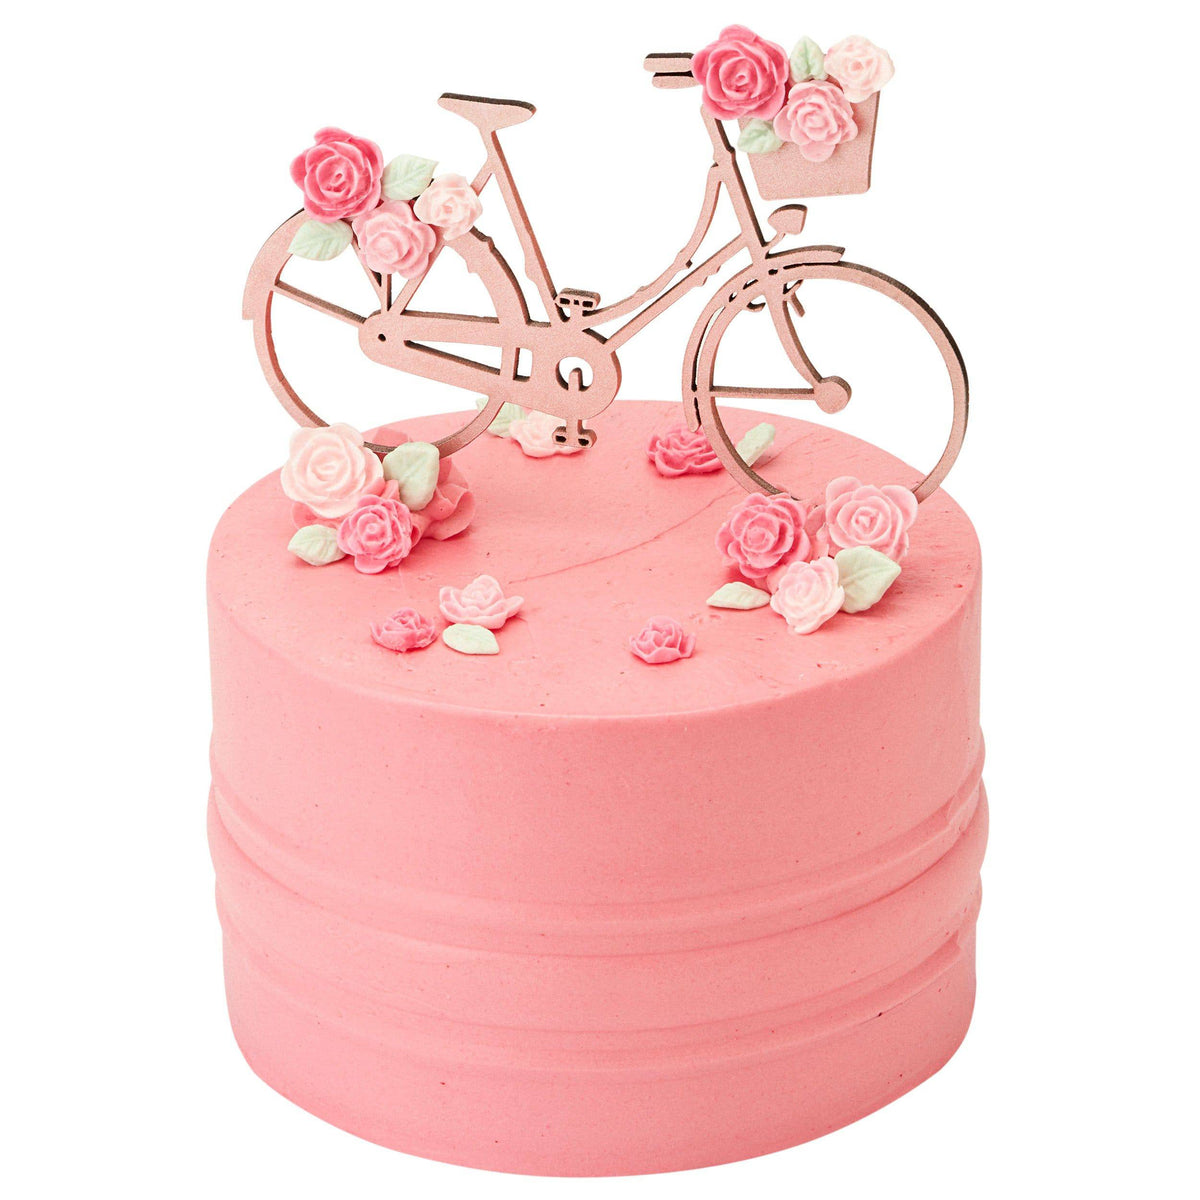 Bycicle cake | Cycling cake, Bike cakes, Bicycle cake